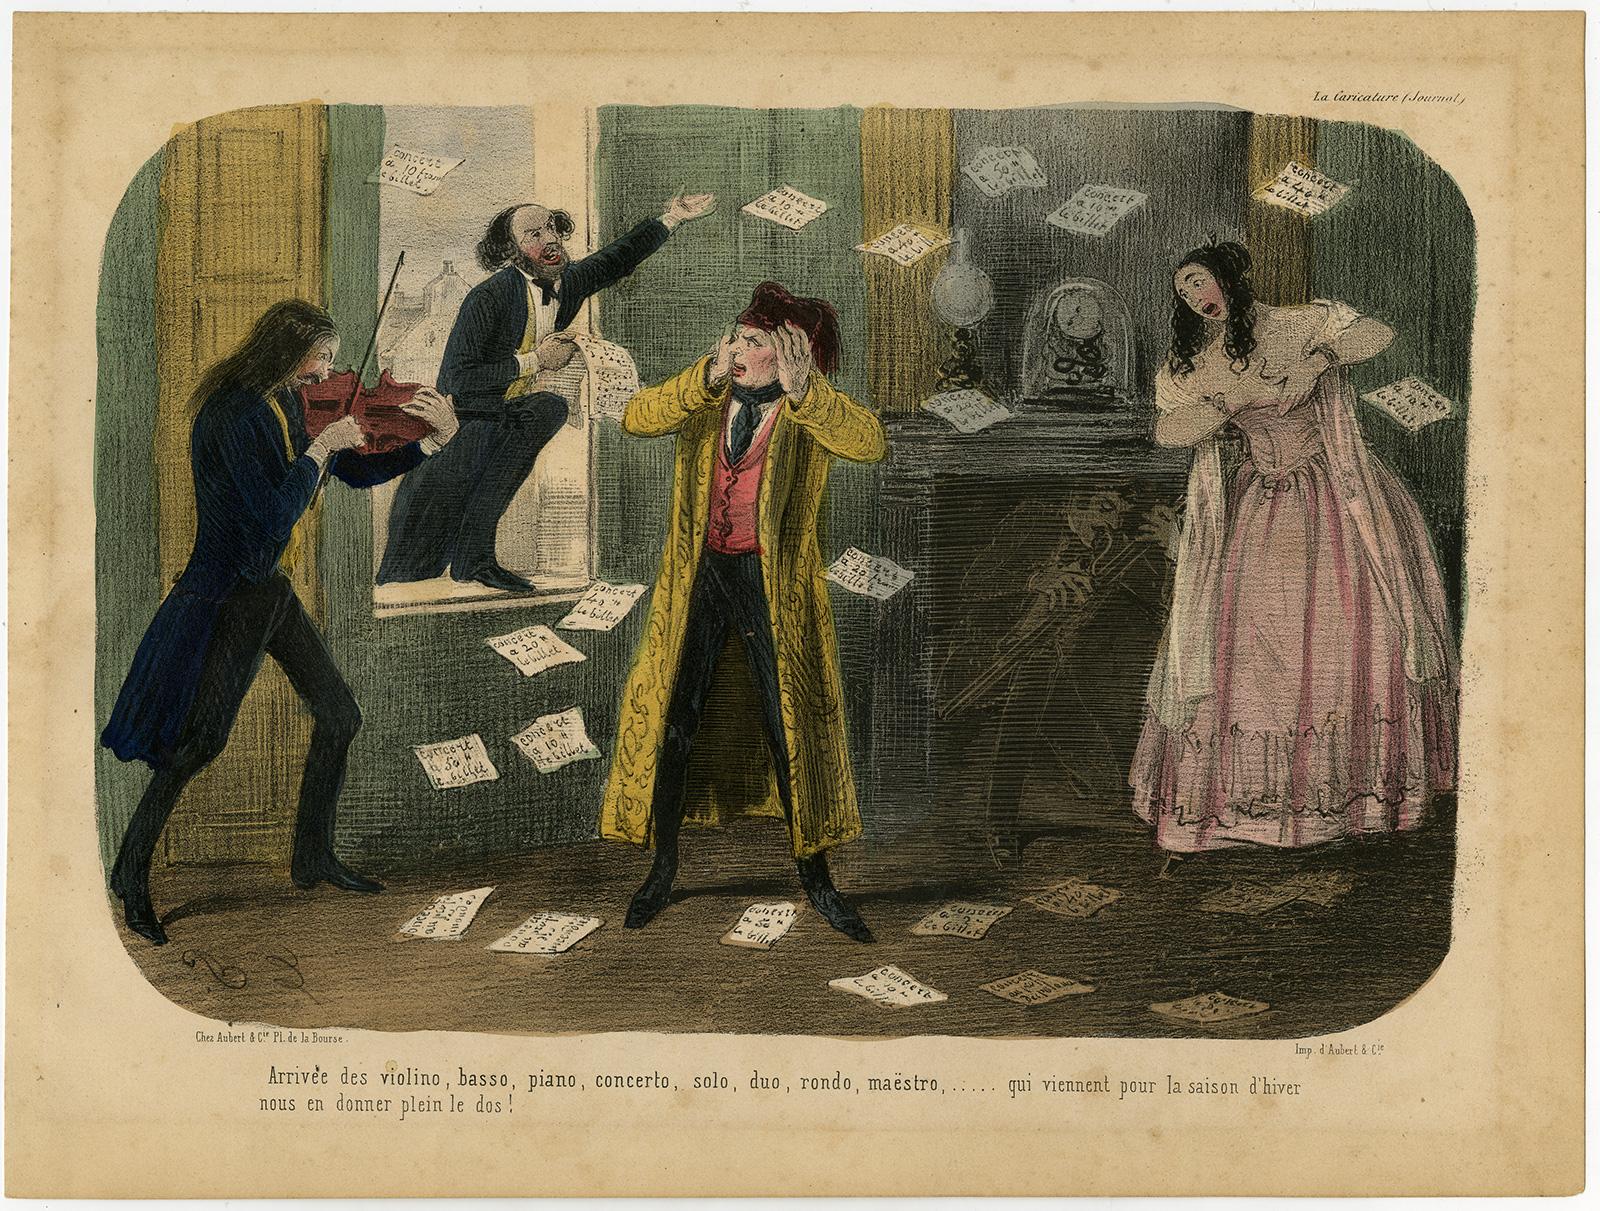 Unknown Portrait Print - Musical winterseason in Paris - satire - Lithograph - 19th Century